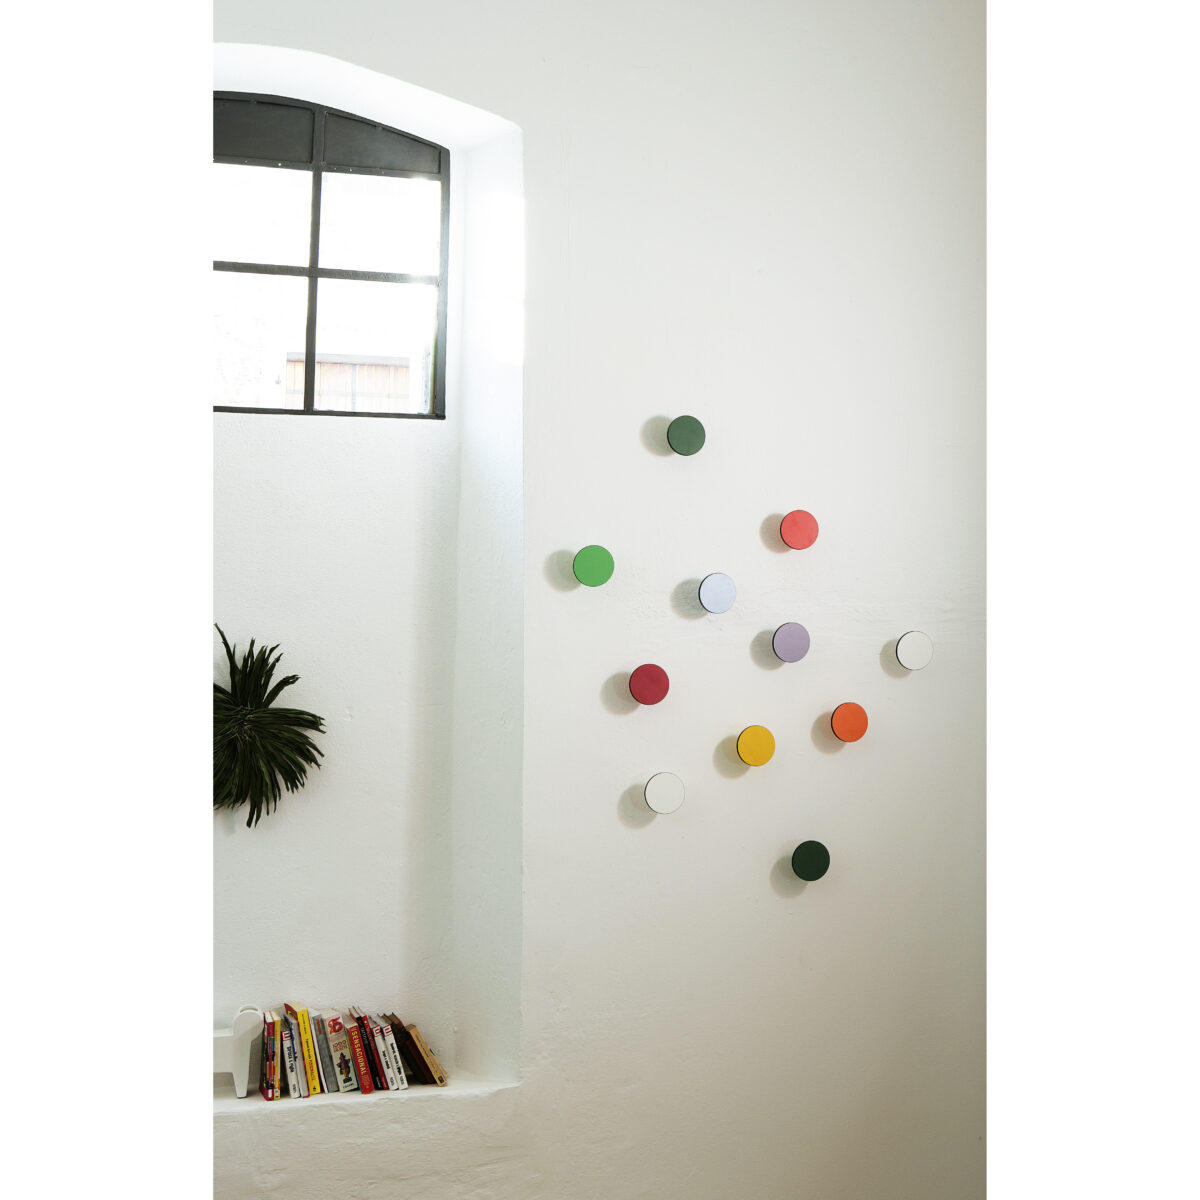 appendiabiti art up colorati posti in ordine sparso su una parete bianca